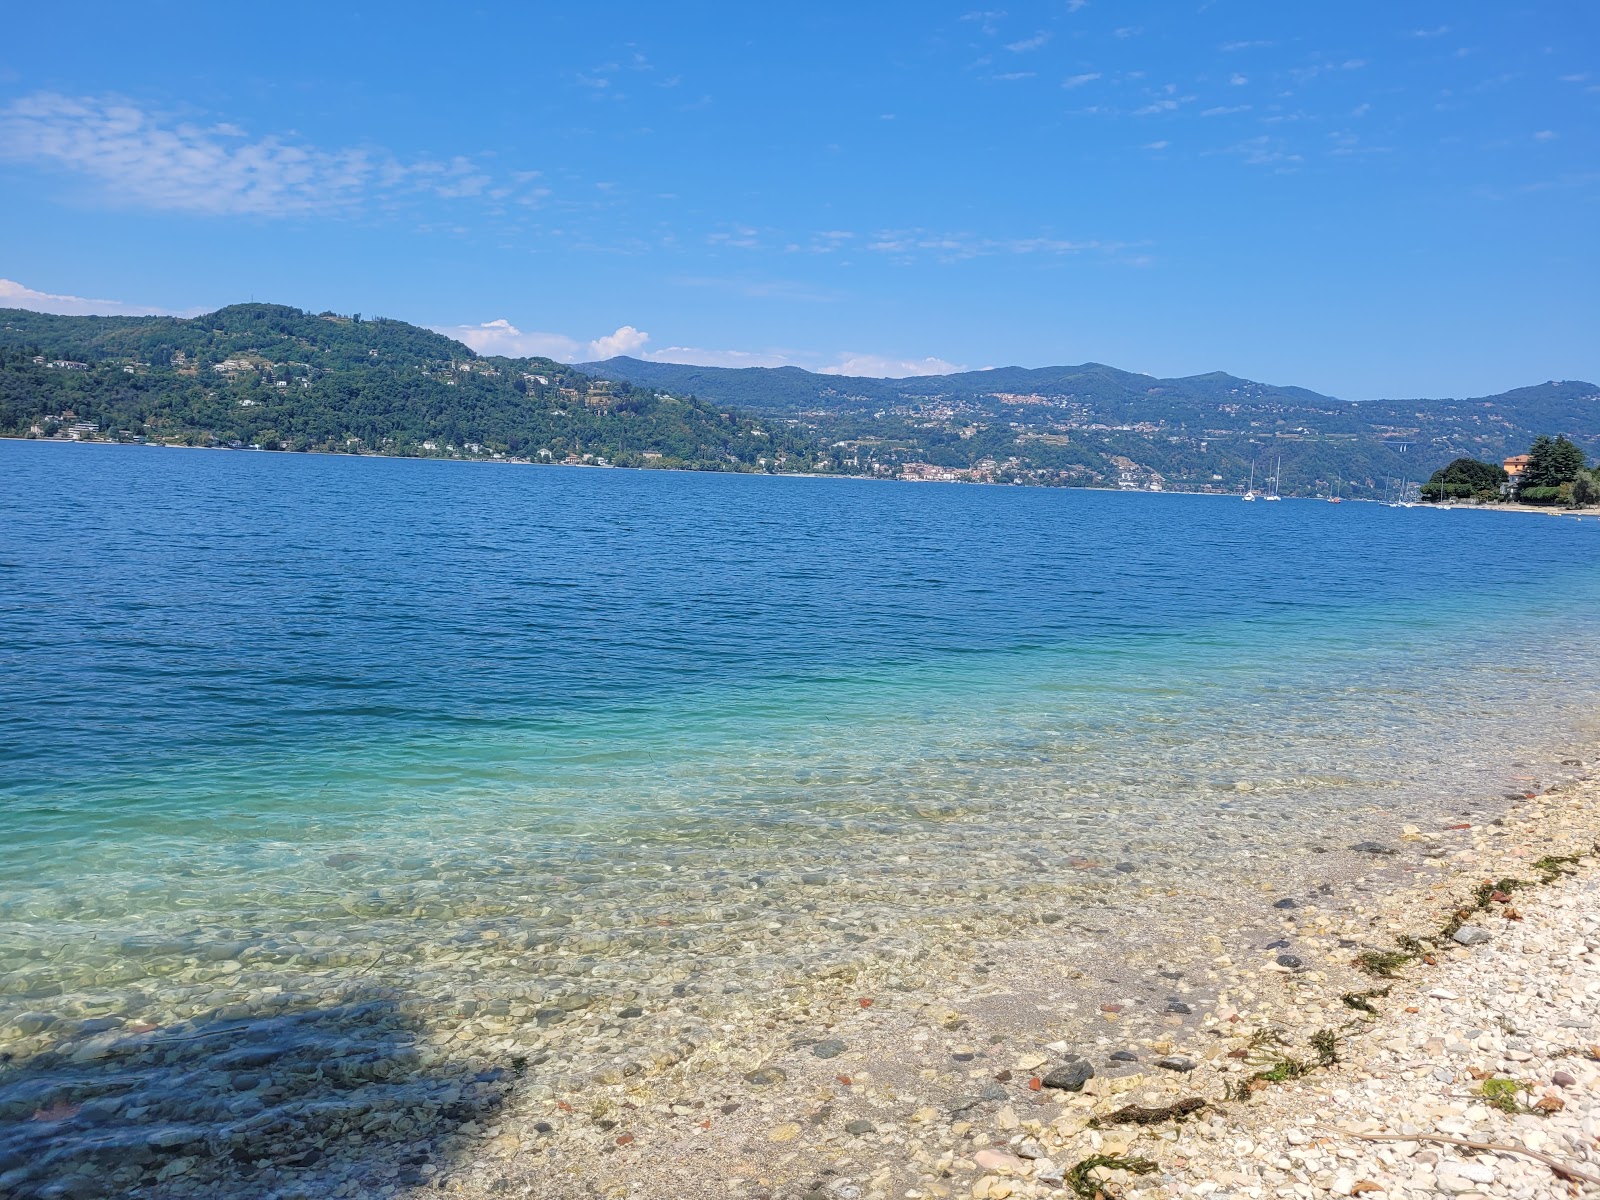 Foto von Spiaggia libera di Angera mit türkisfarbenes wasser Oberfläche